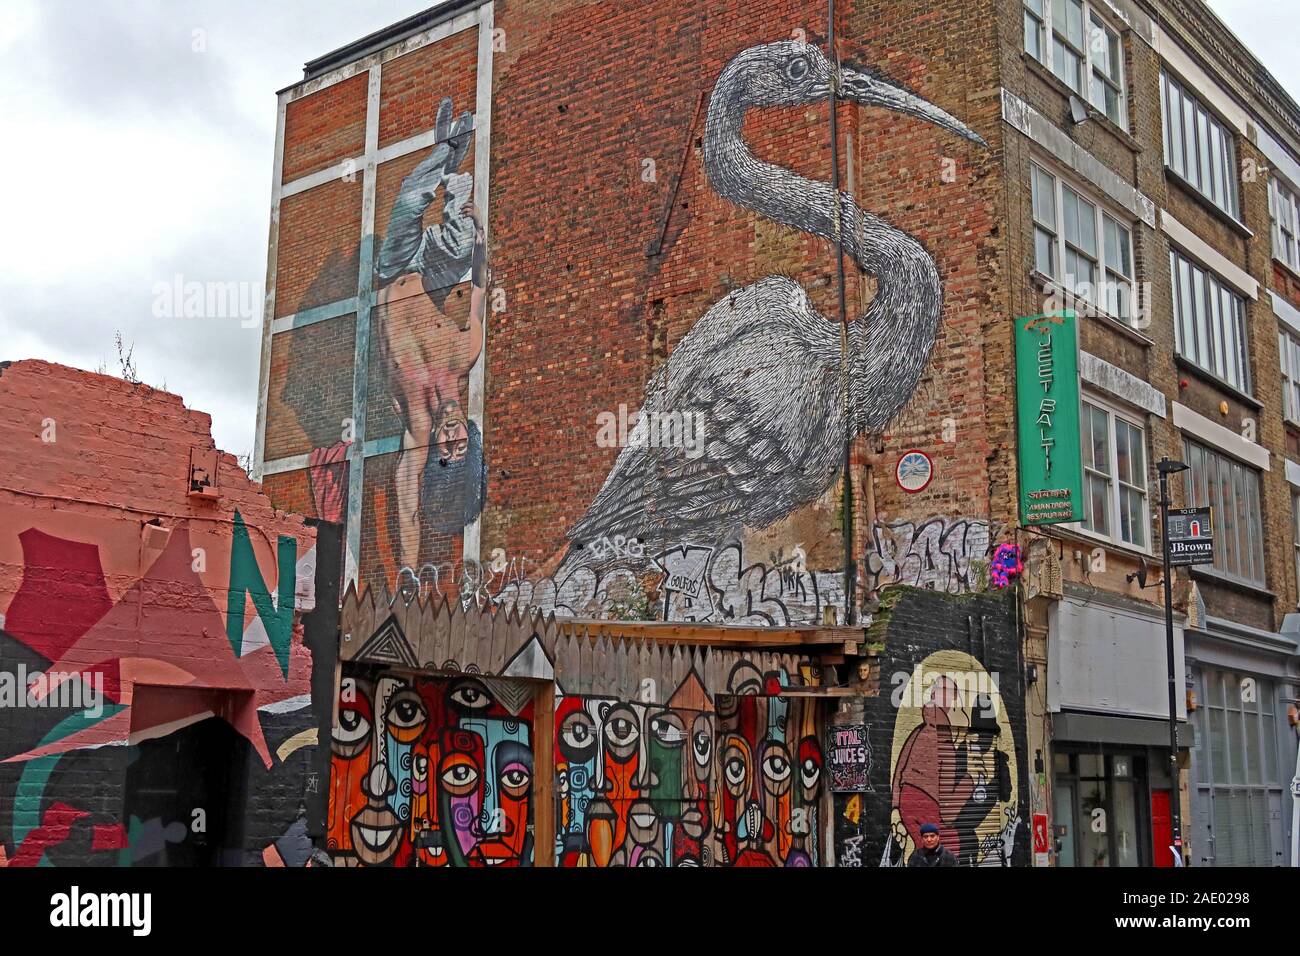 Stork, Hanbury Street, Brick Lane, Kunst und Graffiti, Shoreditch, Tower Hamlets, East End, London, South East, England, Großbritannien, E1 6QL Stockfoto